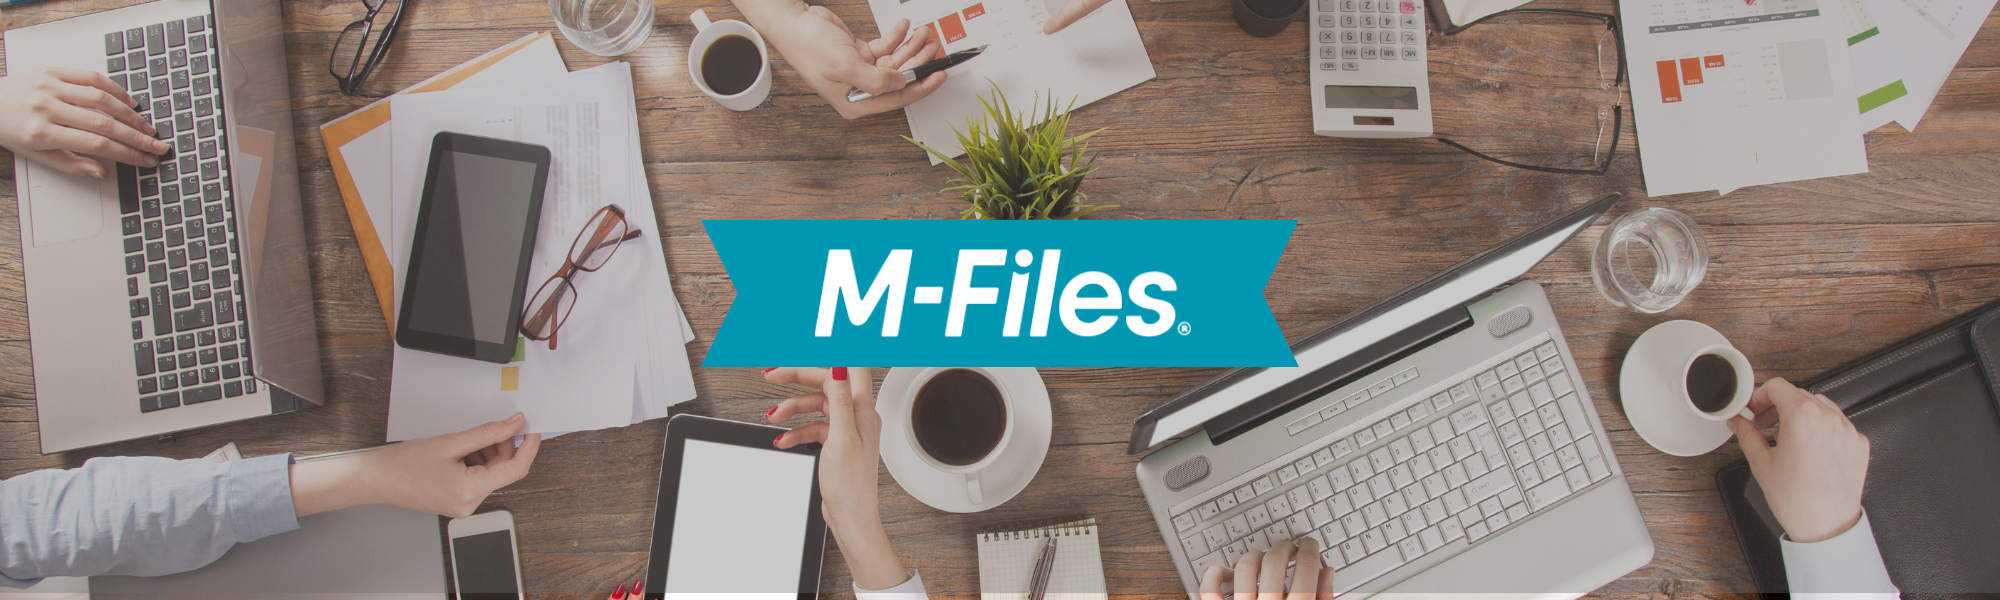 M-Files Kalite Yönetim Sistemi